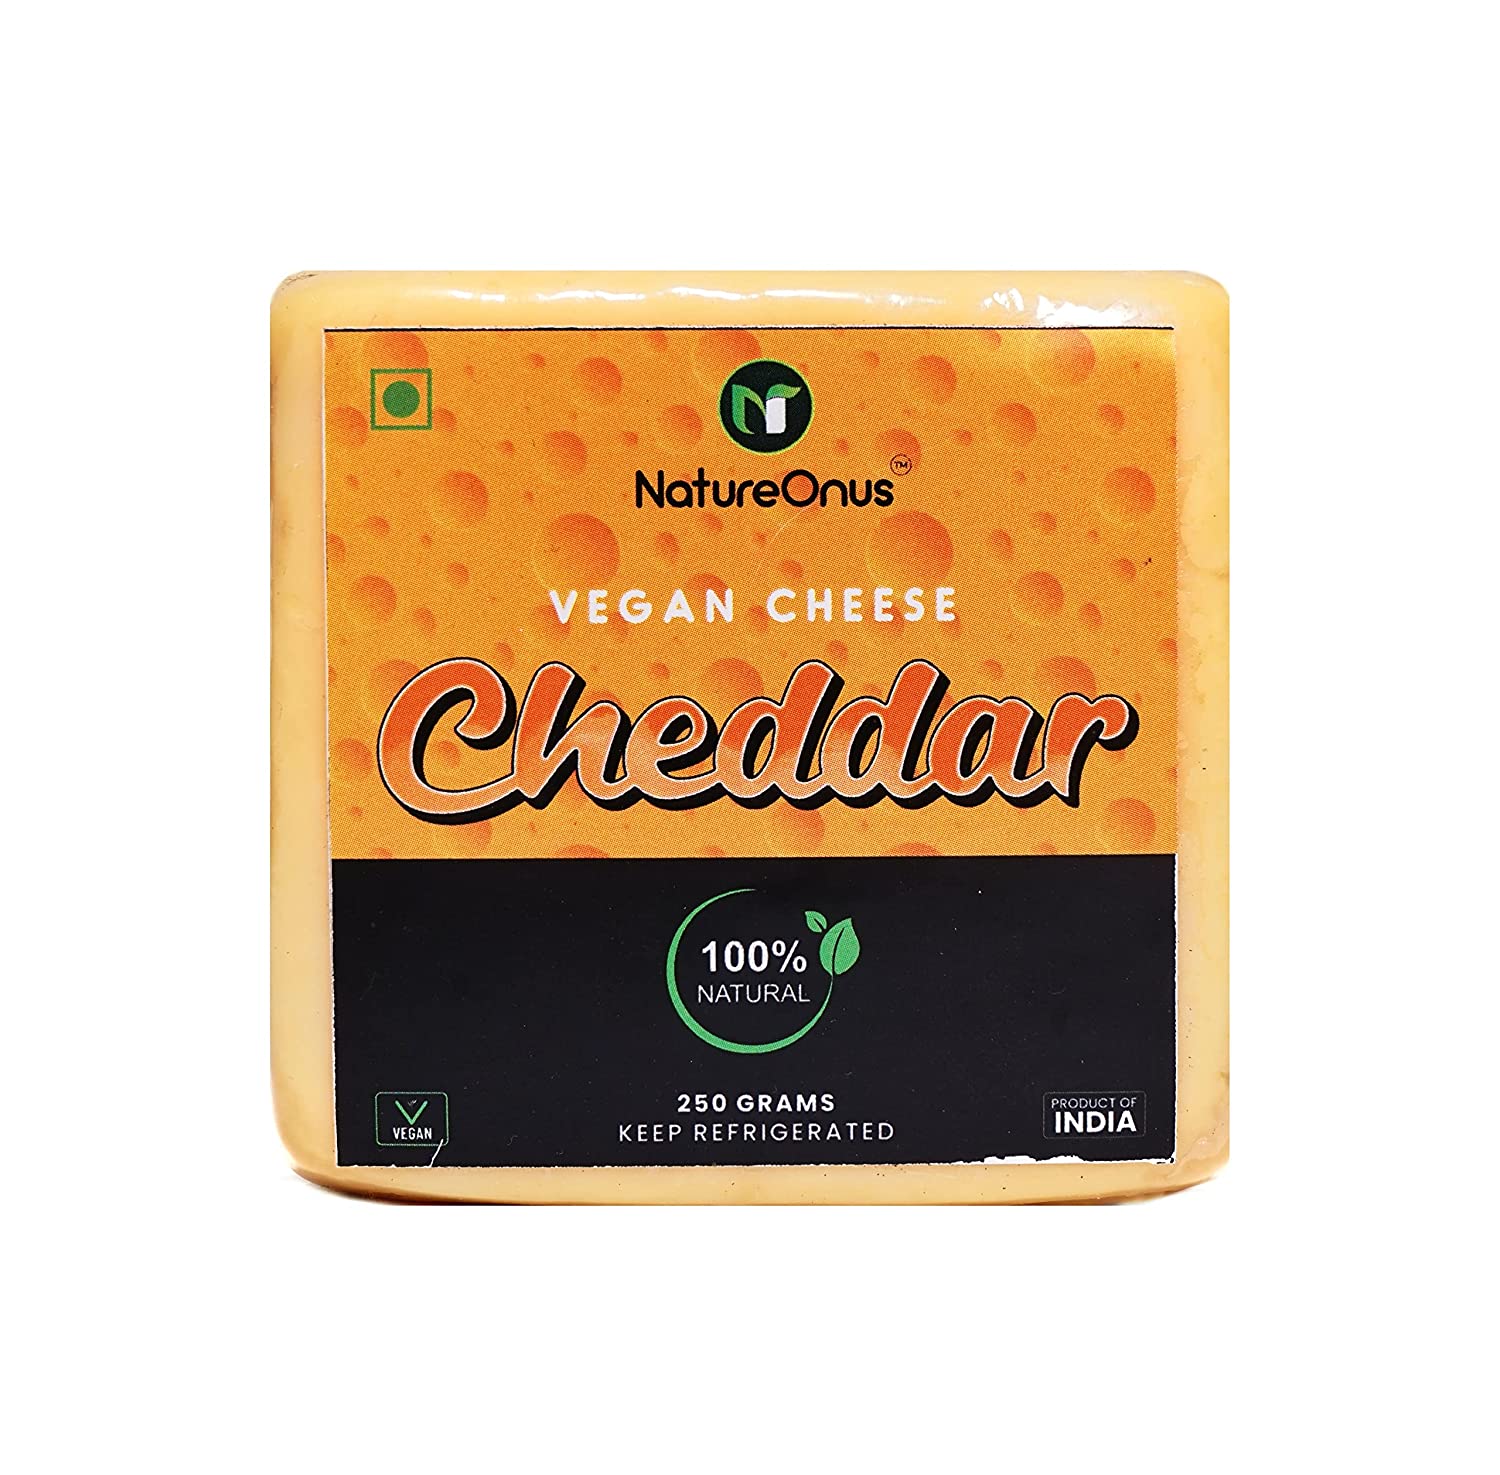 NatureOnus- Vegan Cheddar Cheese Image